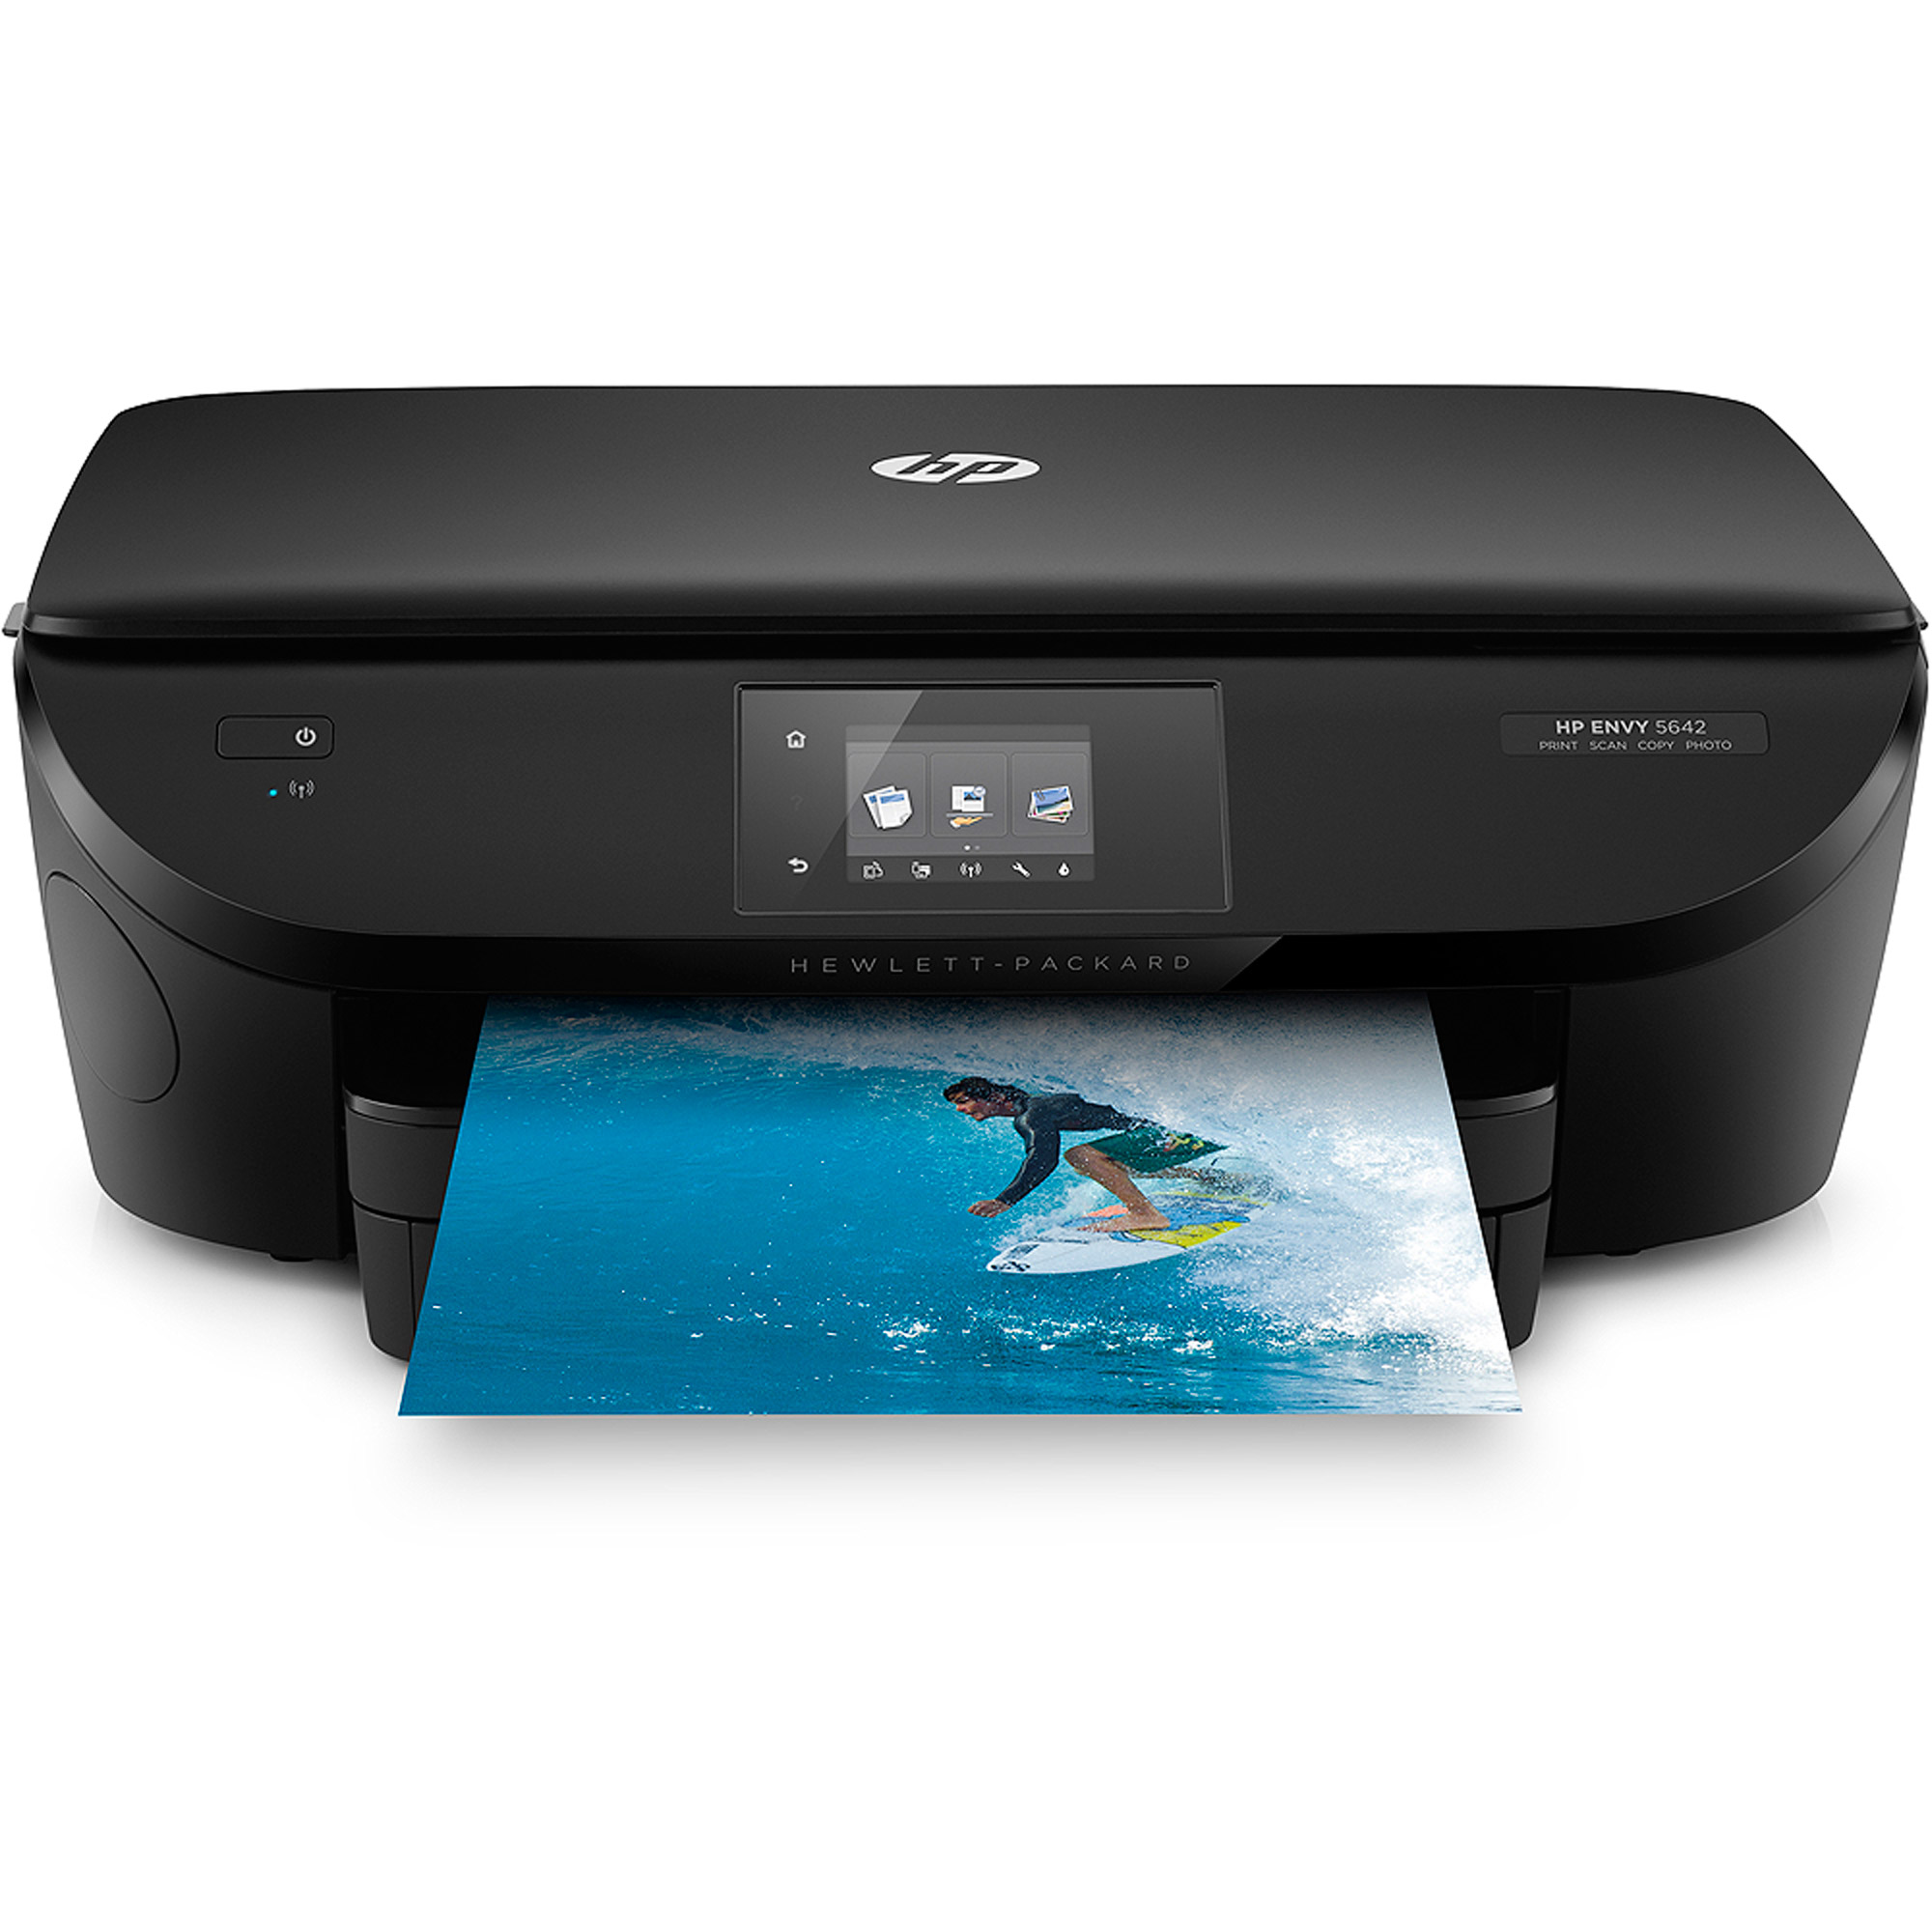 HP Envy 5642 All-in-One Printer/Copier/Scanner - image 4 of 4